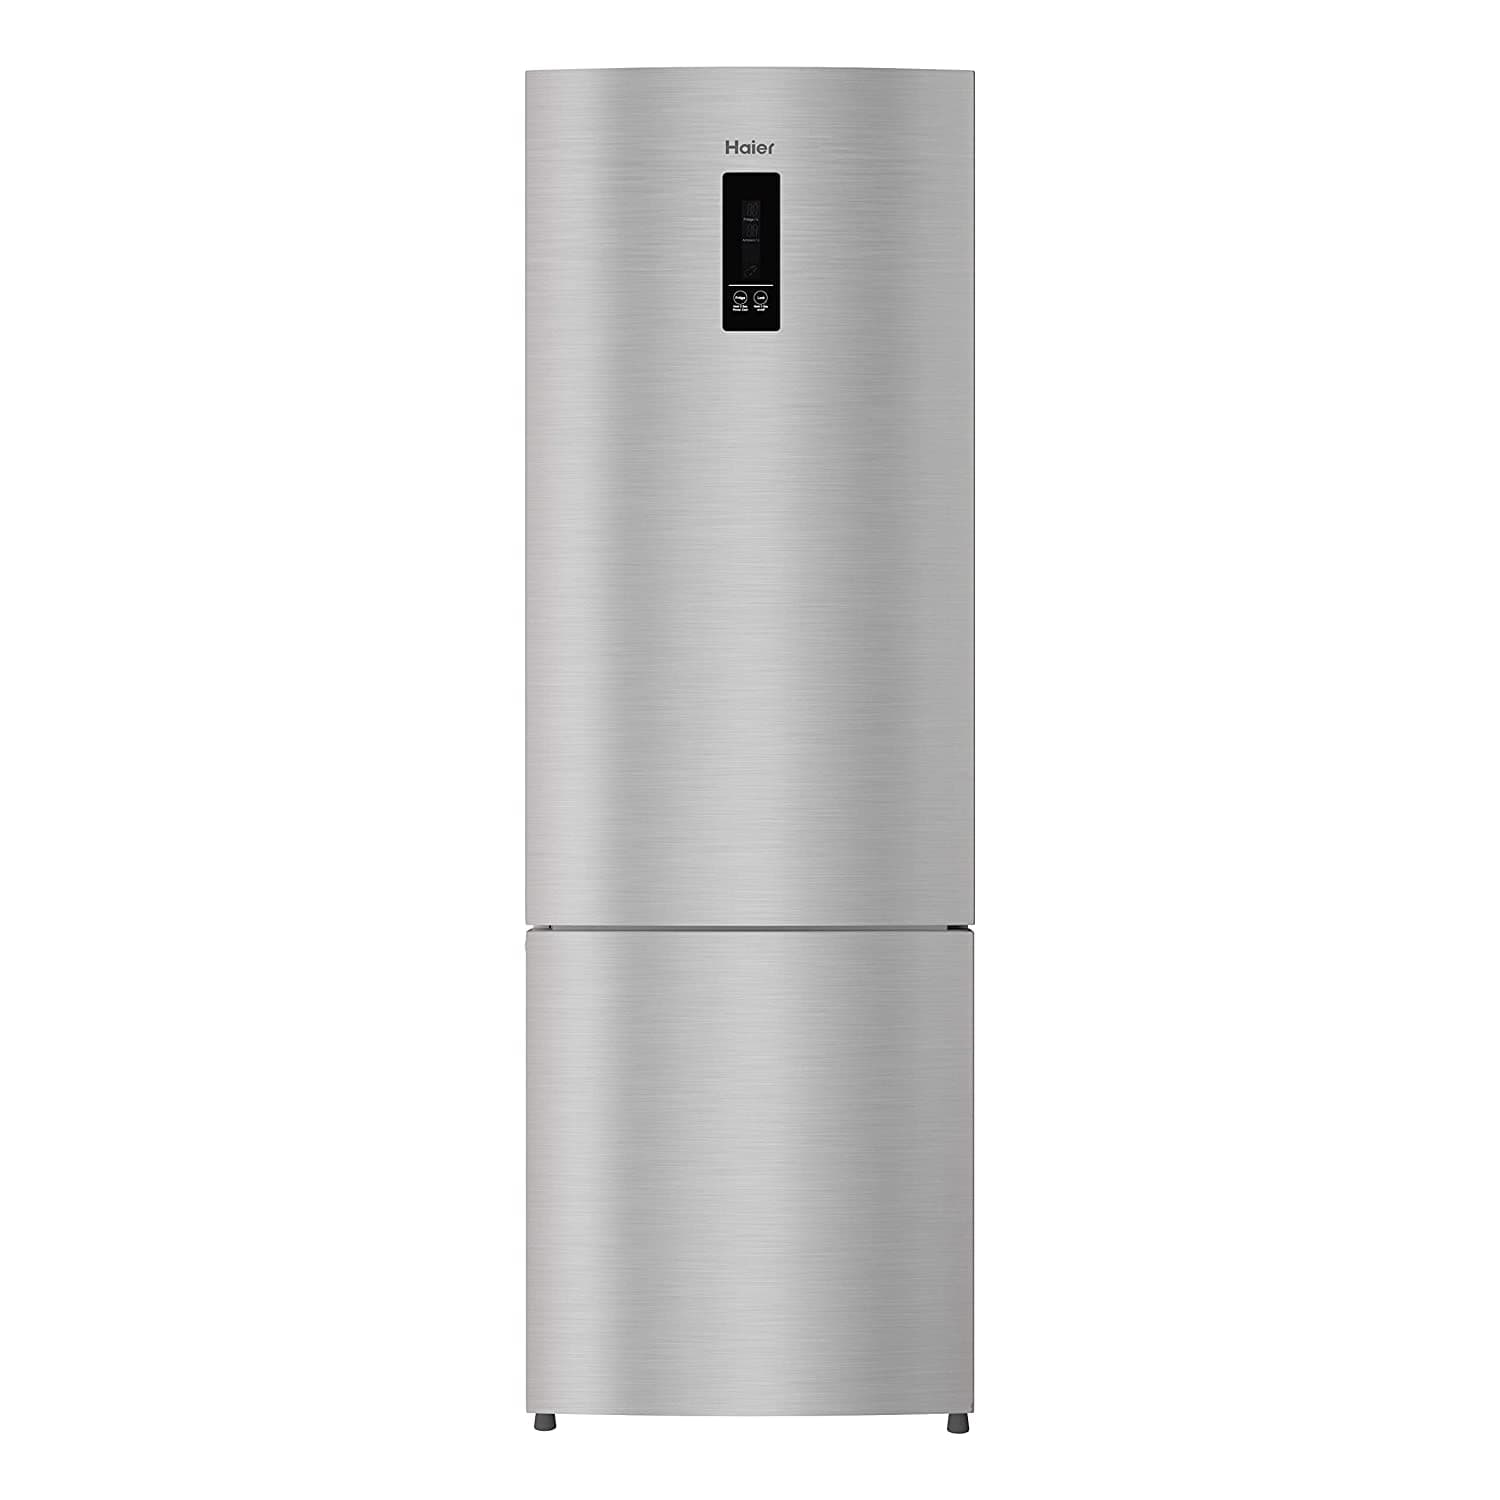 Haier HRB-3654PIS-E 345 Ltr Double Door Refrigerator